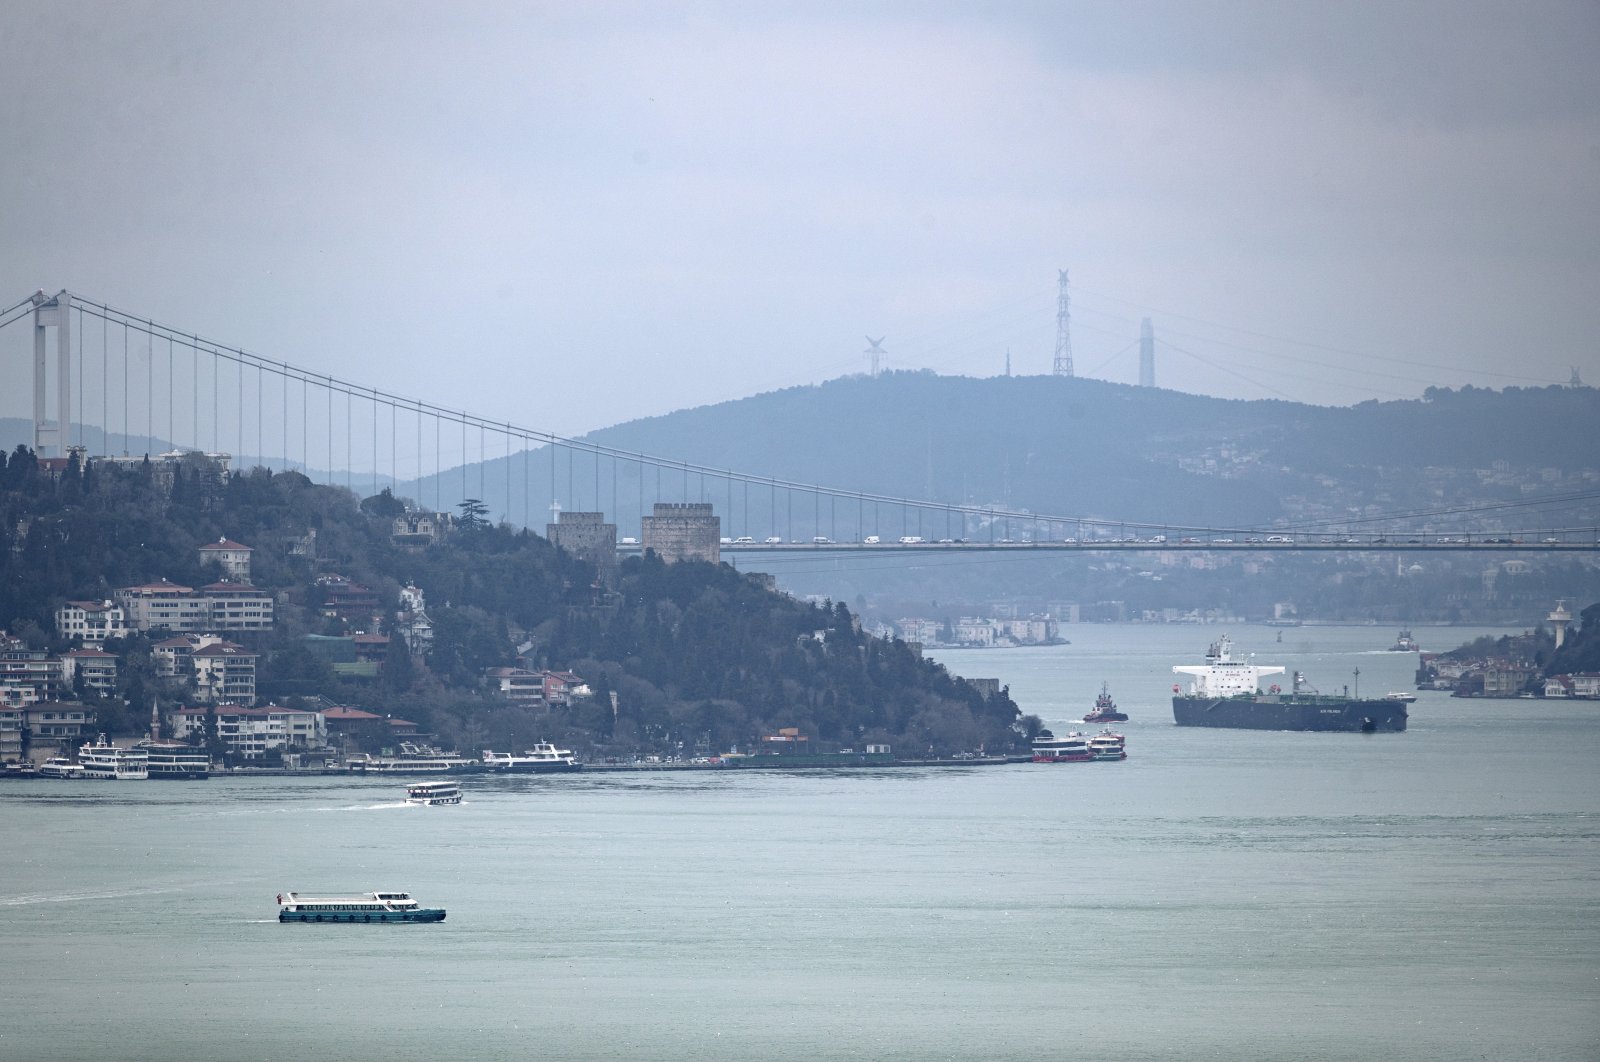 A cargo ship sails under the Fatih Sultan Mehmet Bridge on the Bosporus in Istanbul, Turkey, March 1, 2022. (EPA Photo)